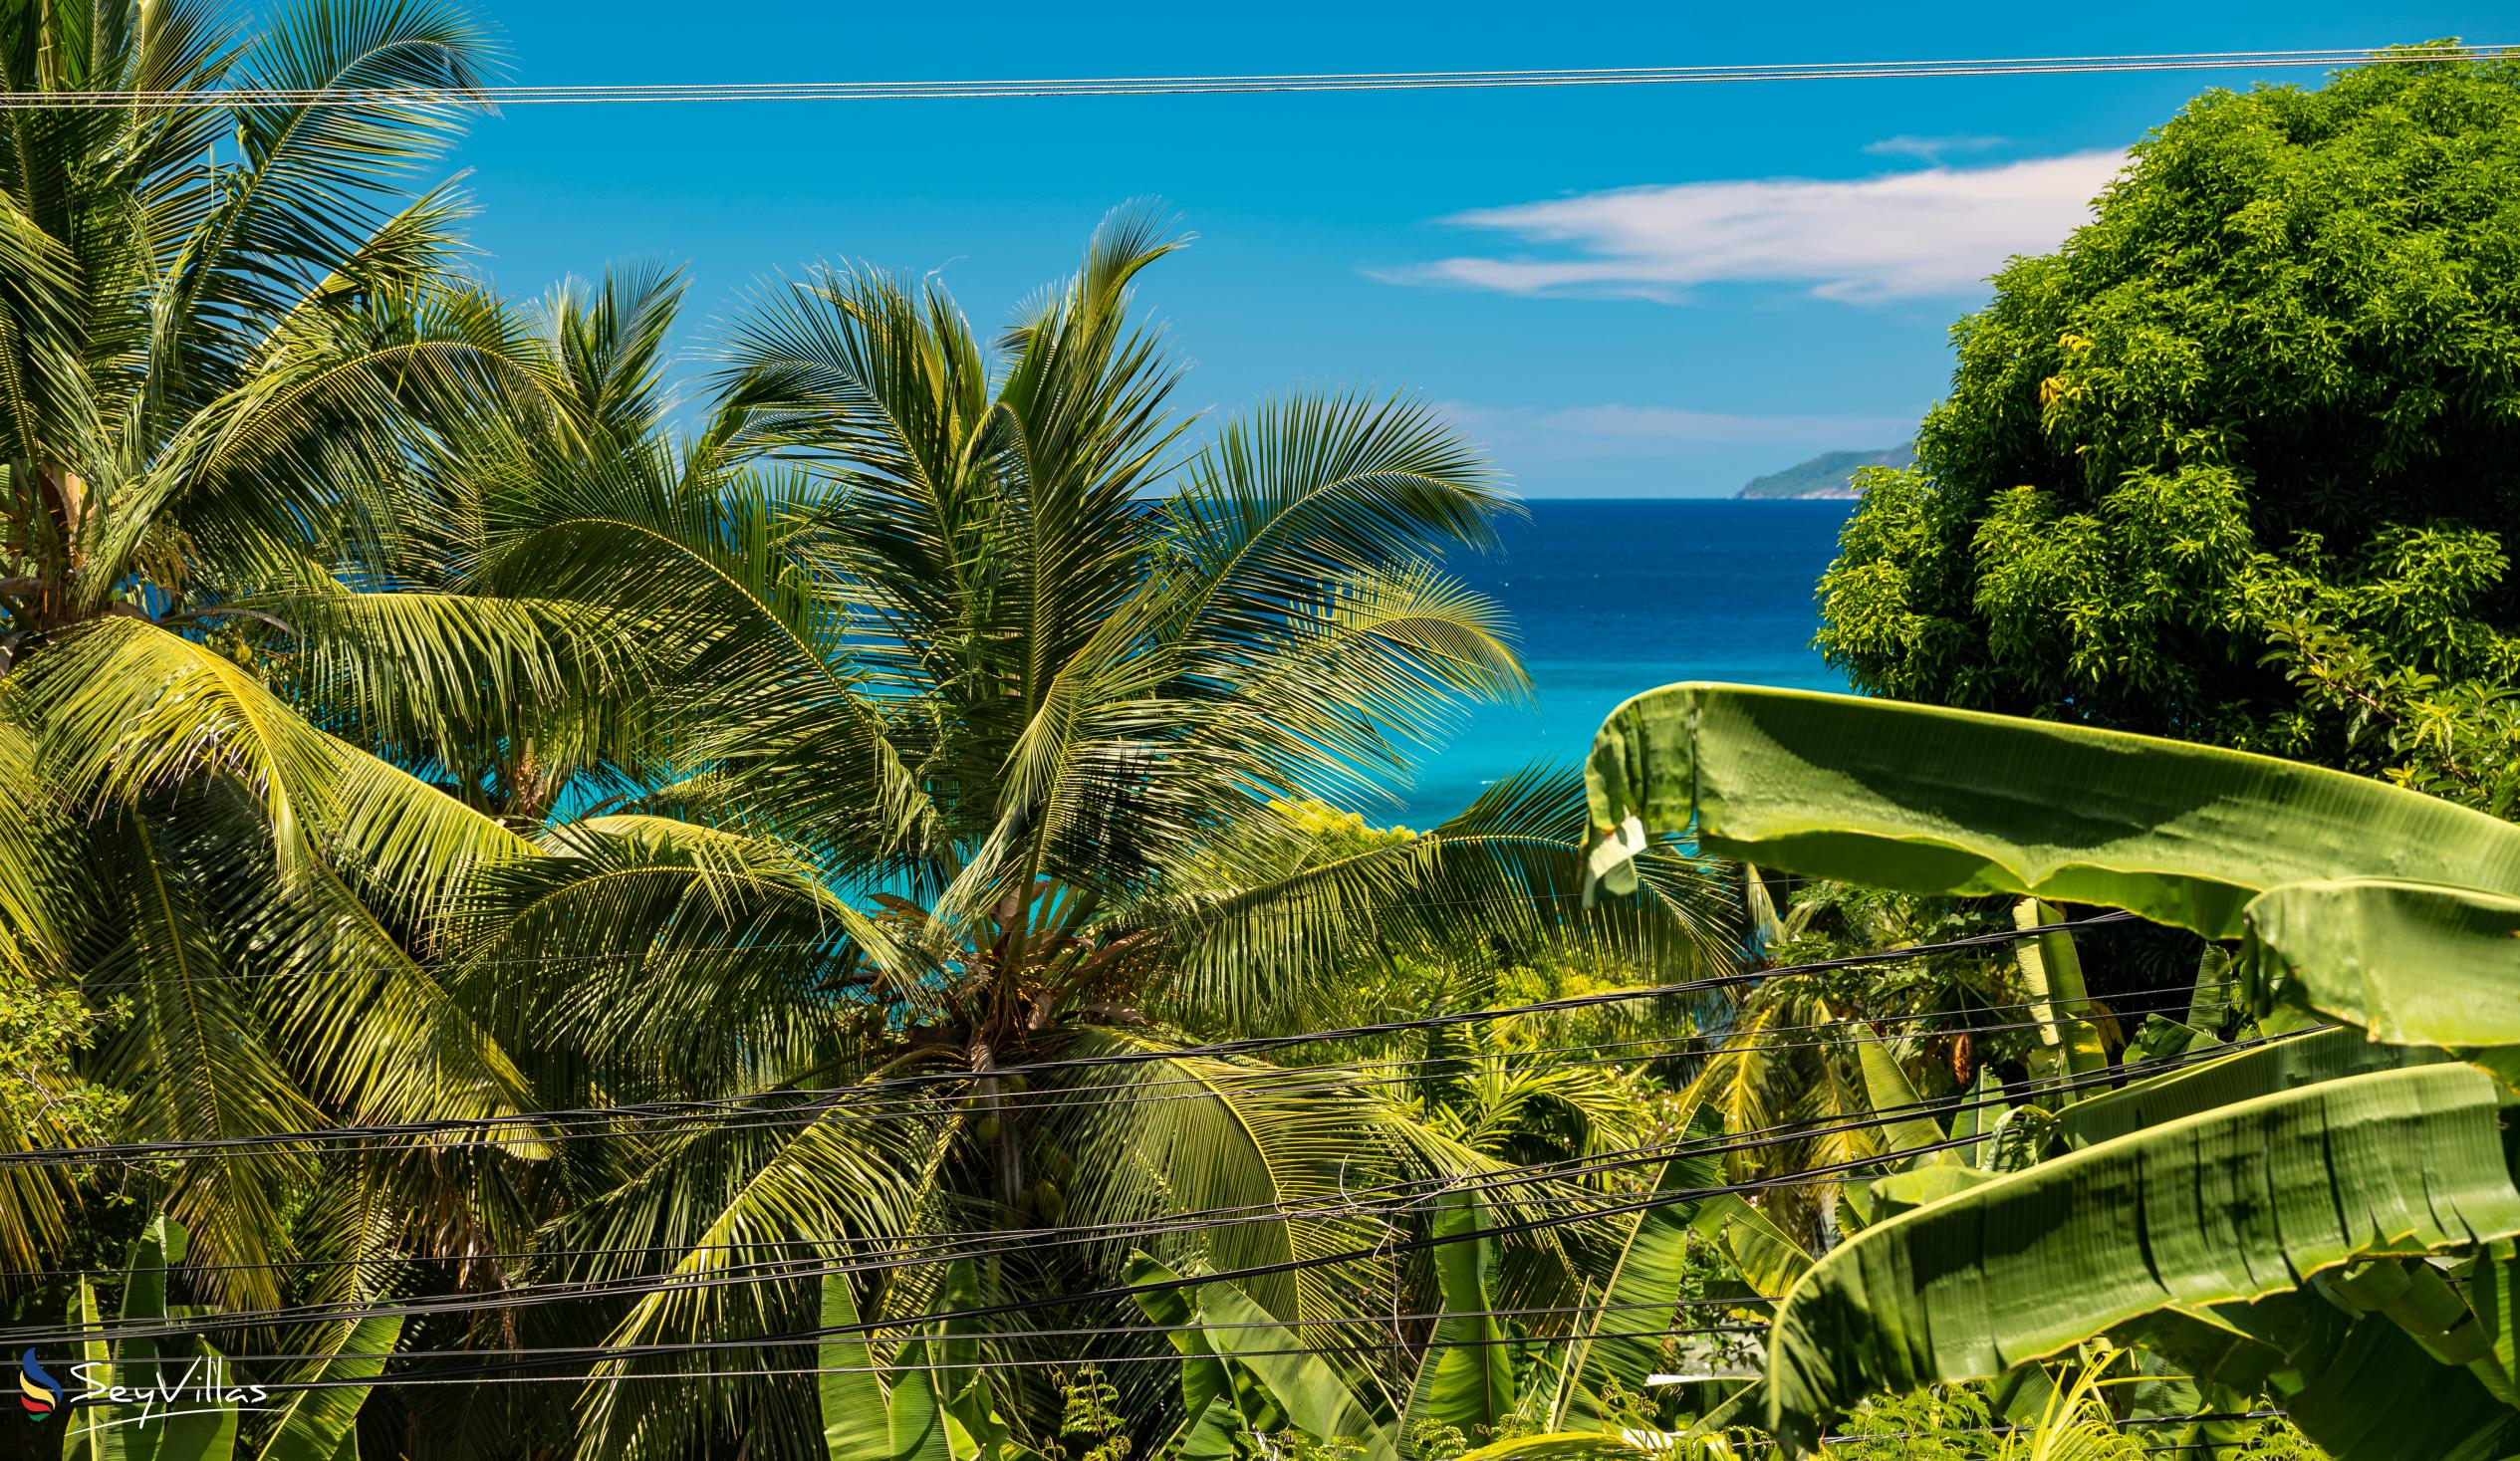 Photo 6: Villa Panoramic Seaview - Outdoor area - Mahé (Seychelles)